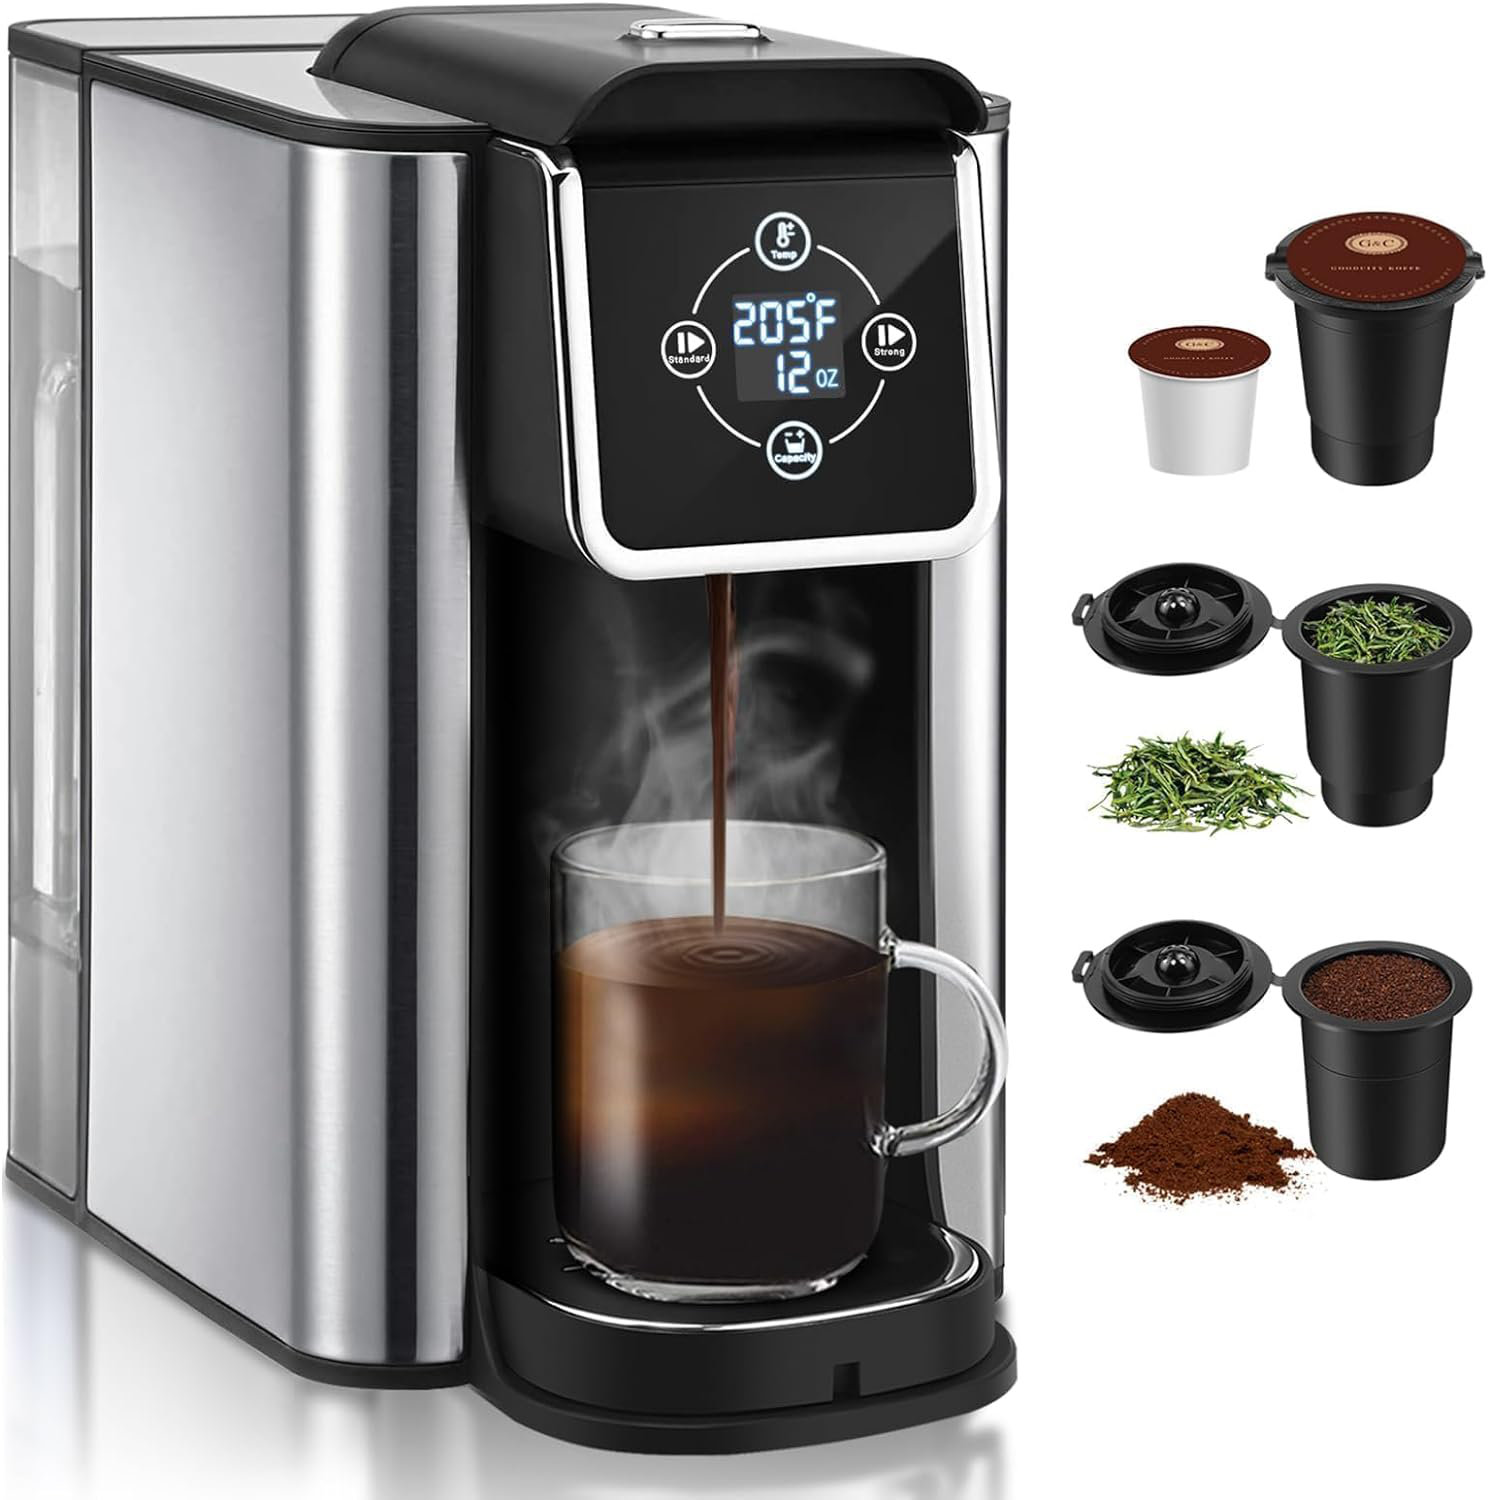 Keurig K-duo Single Serve And Carafe Coffee Maker, Coffee, Tea & Espresso, Furniture & Appliances